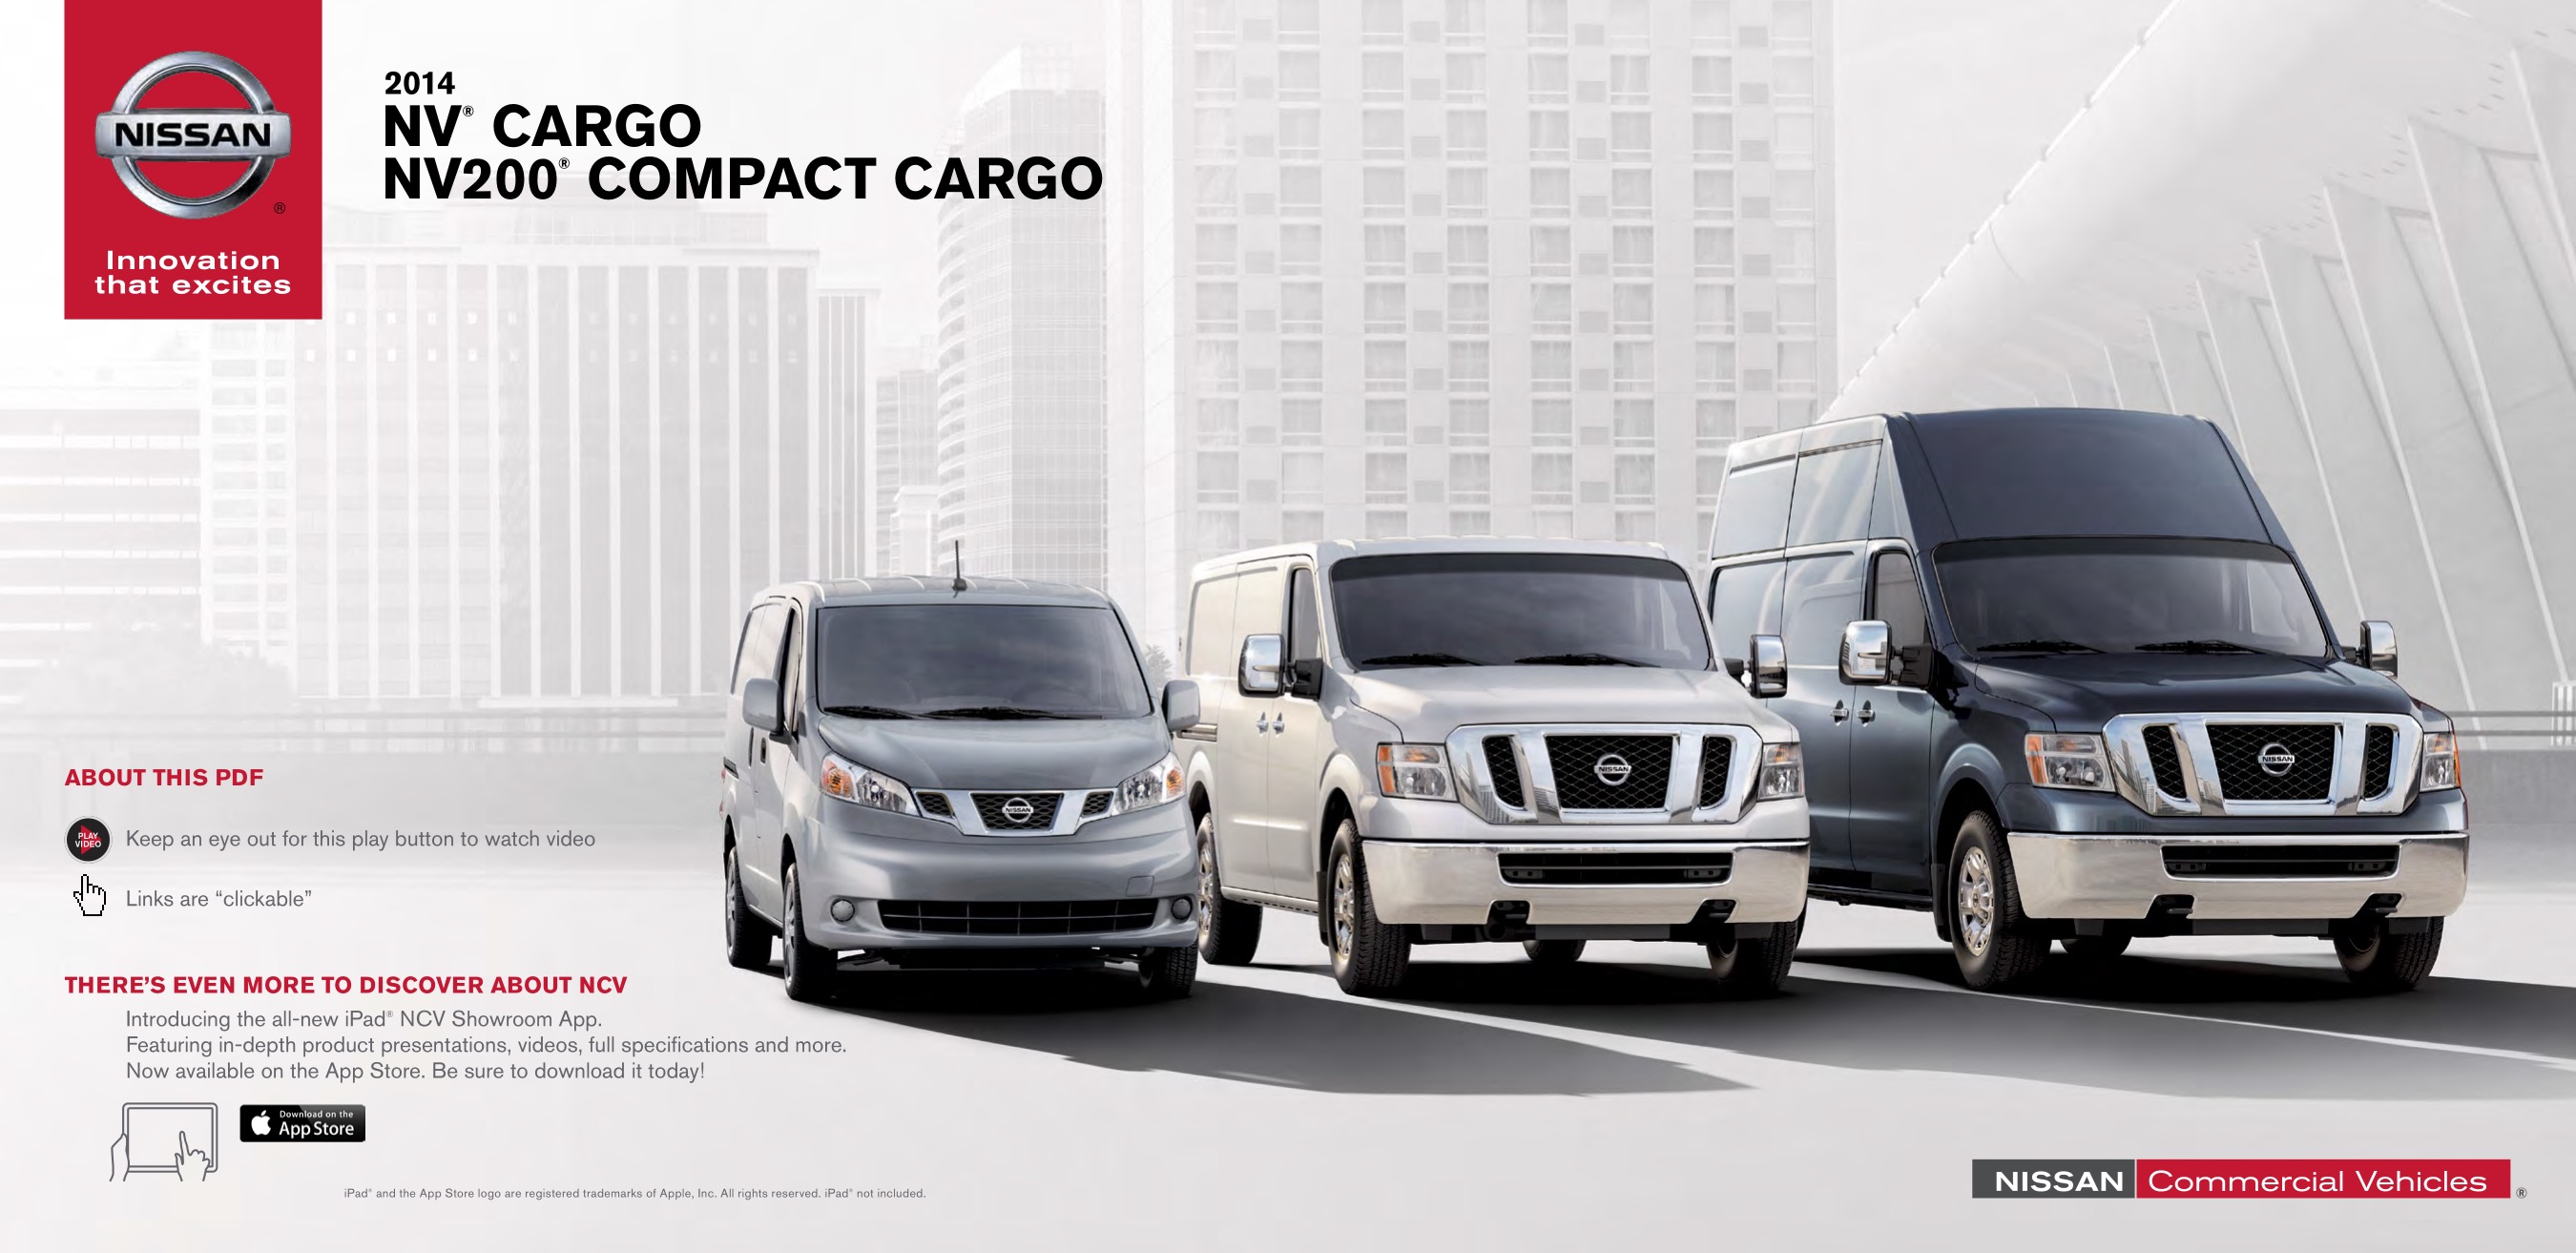 2014 Nissan NV Cargo Brochure